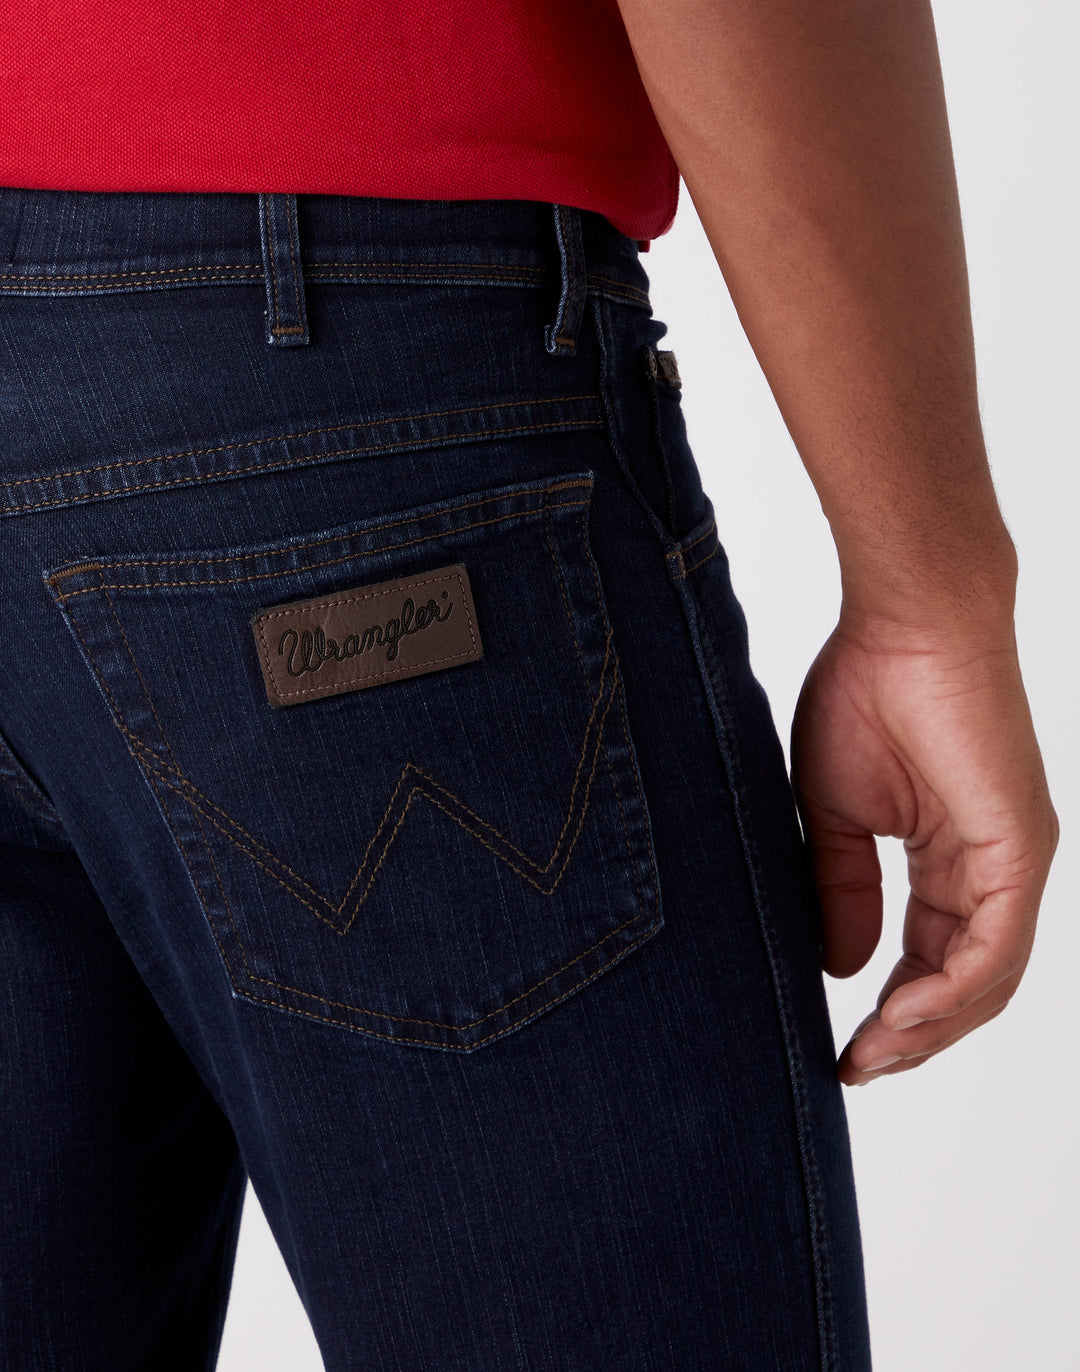 Wrangler Texas stretch 5-pocket donkerblauw blue black jeans spijkerbroek modern  regular regular-fit